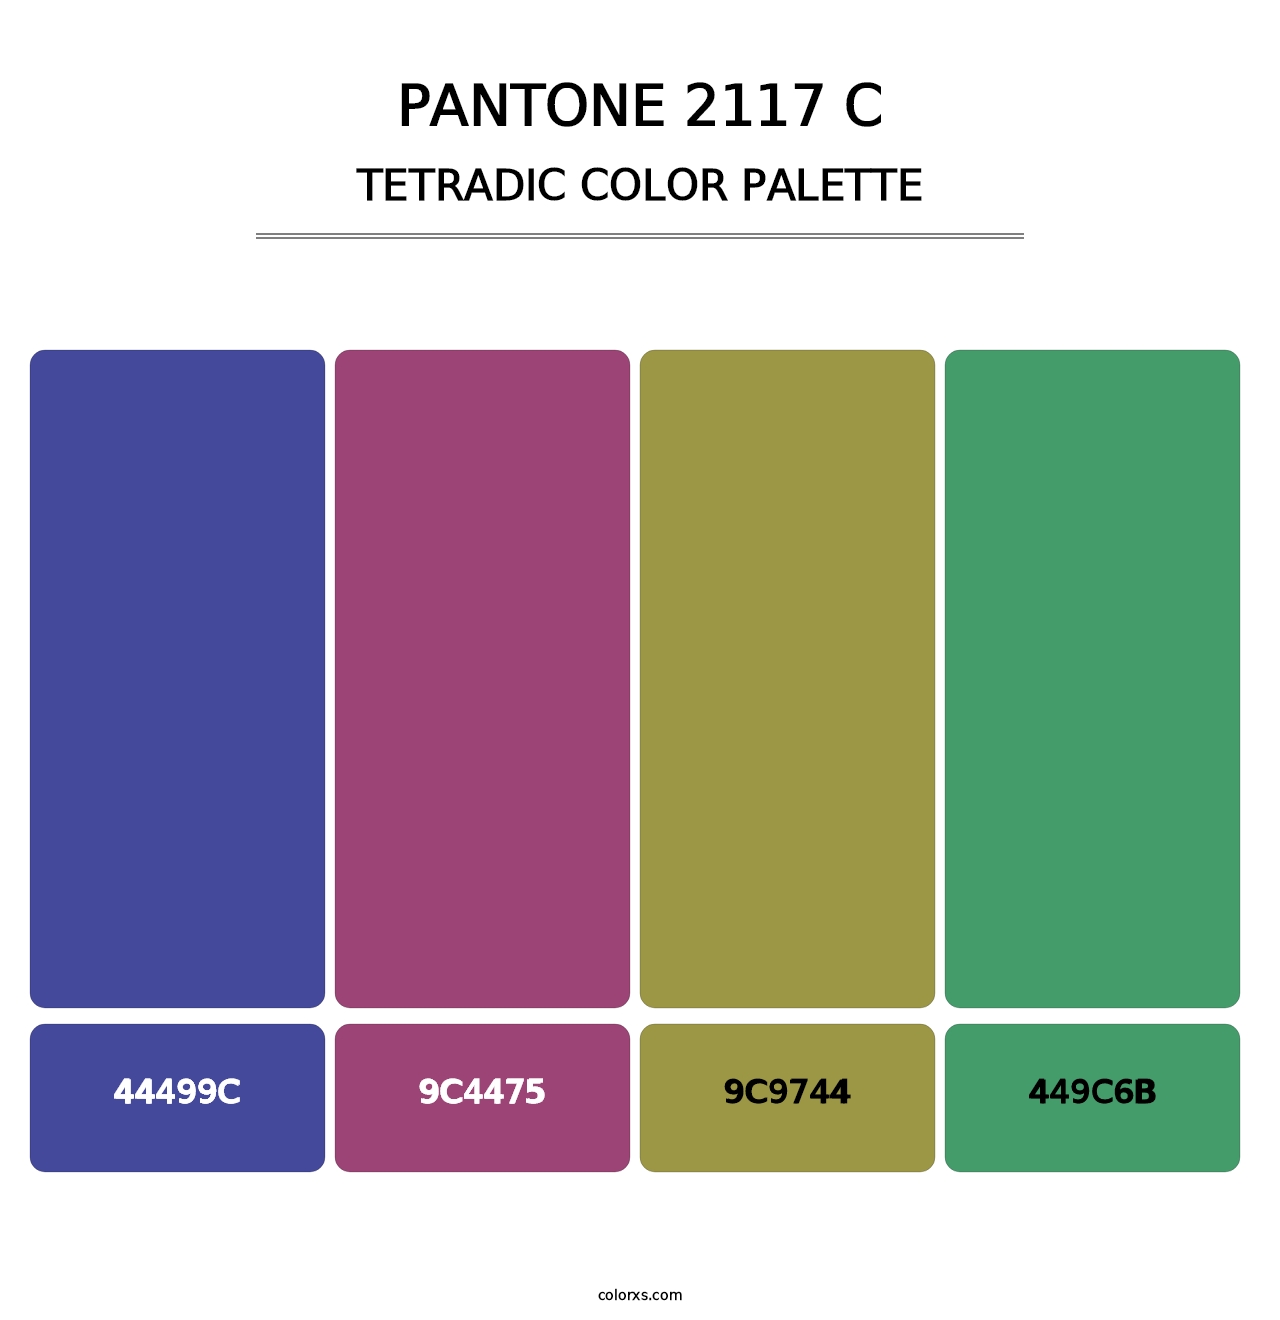 PANTONE 2117 C - Tetradic Color Palette